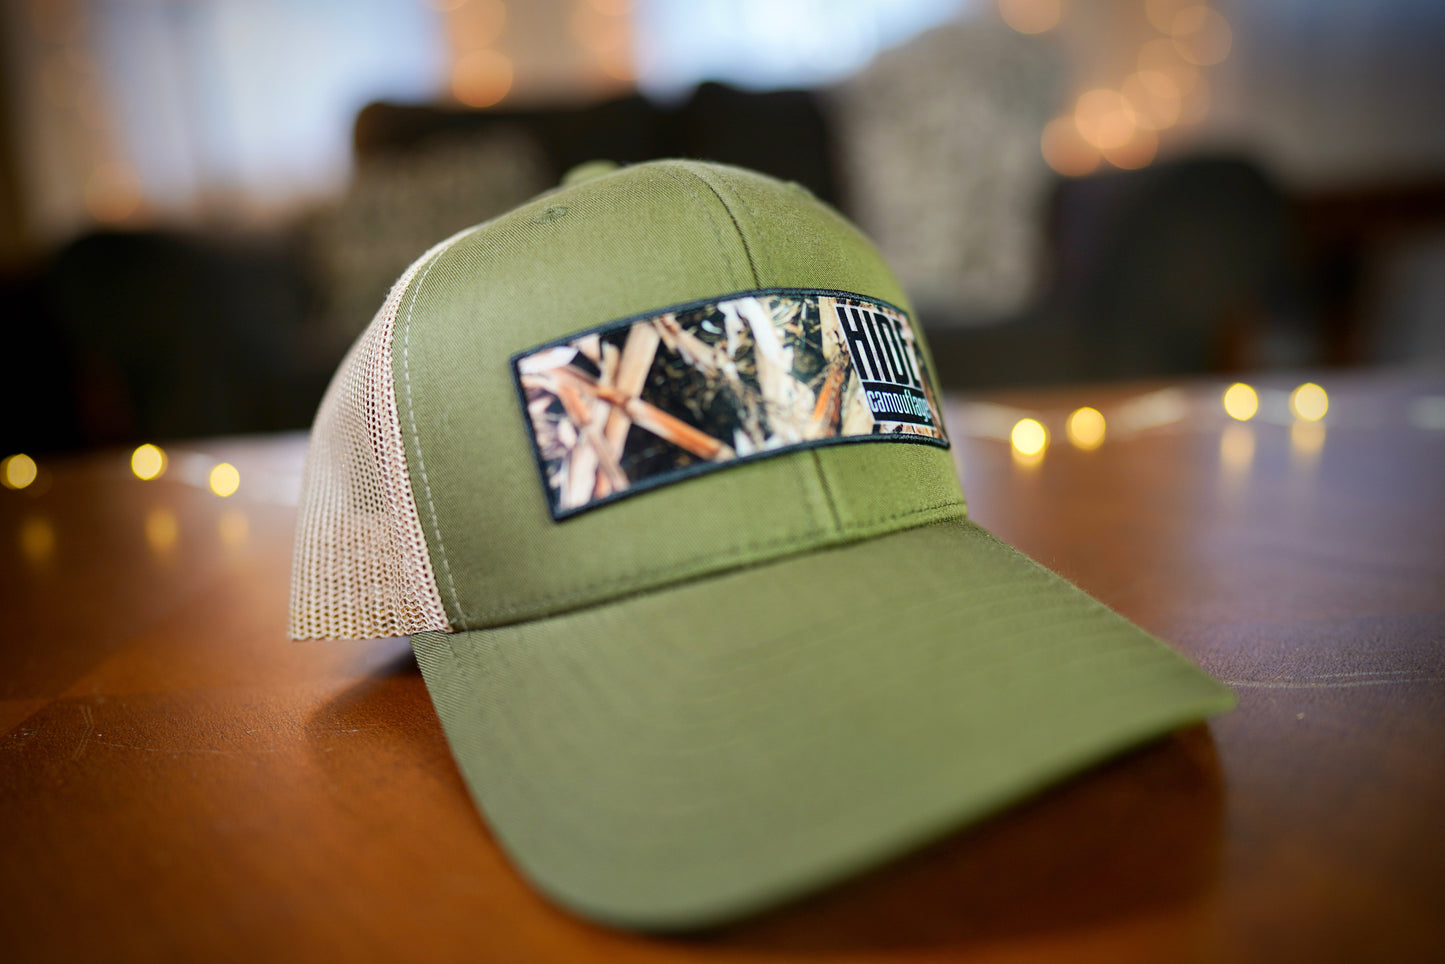 "Hide Camo Cornstalk" Design Trucker Hat (Khaki Mesh/ Moss Green Fabric)